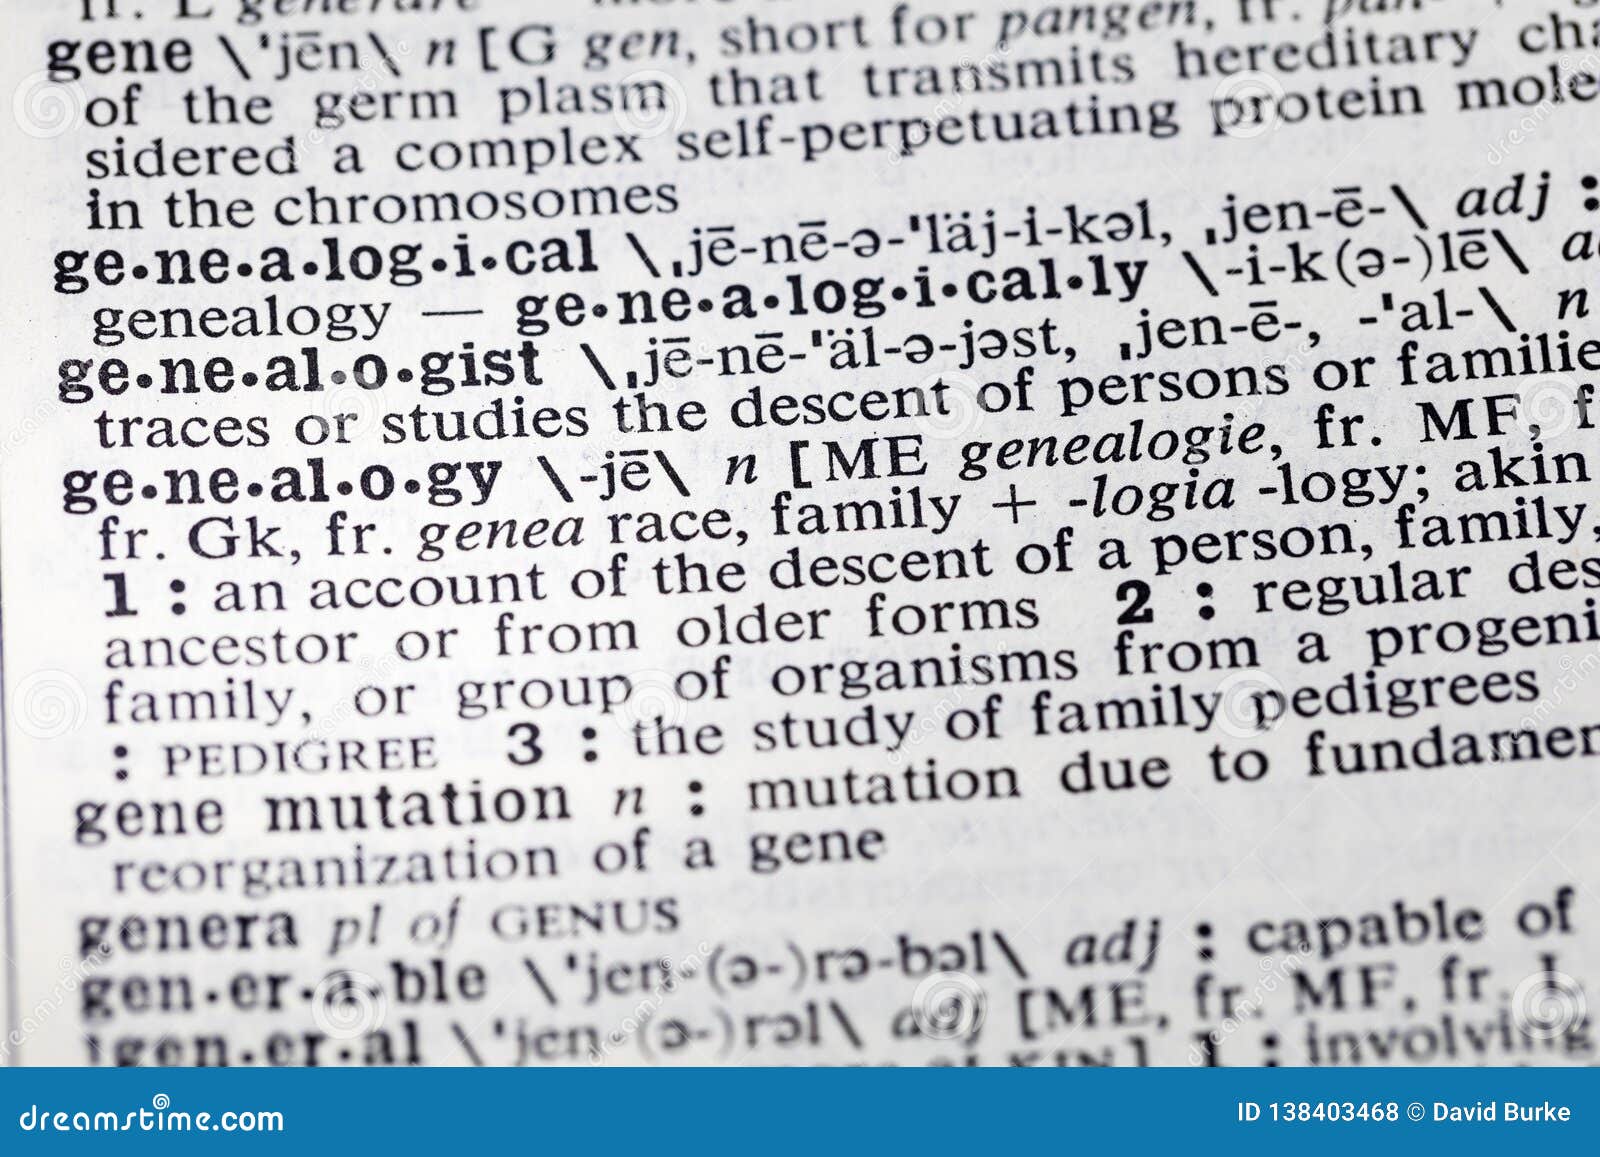 genealogy genealogist gene family descent definition mutation